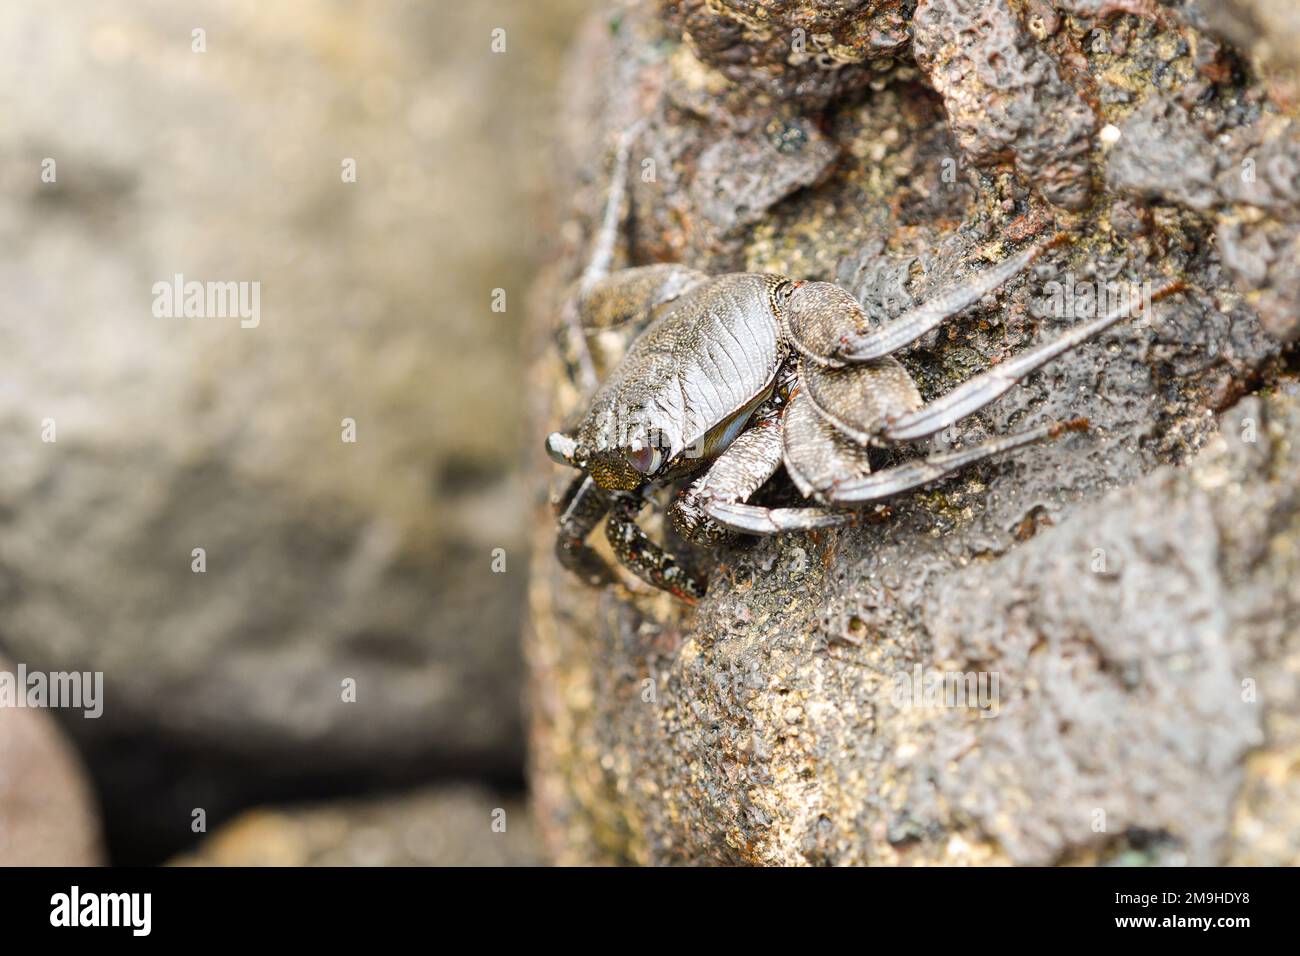 Close-up of Moorish crab among the volcanic rocks of La Graciosa Stock Photo